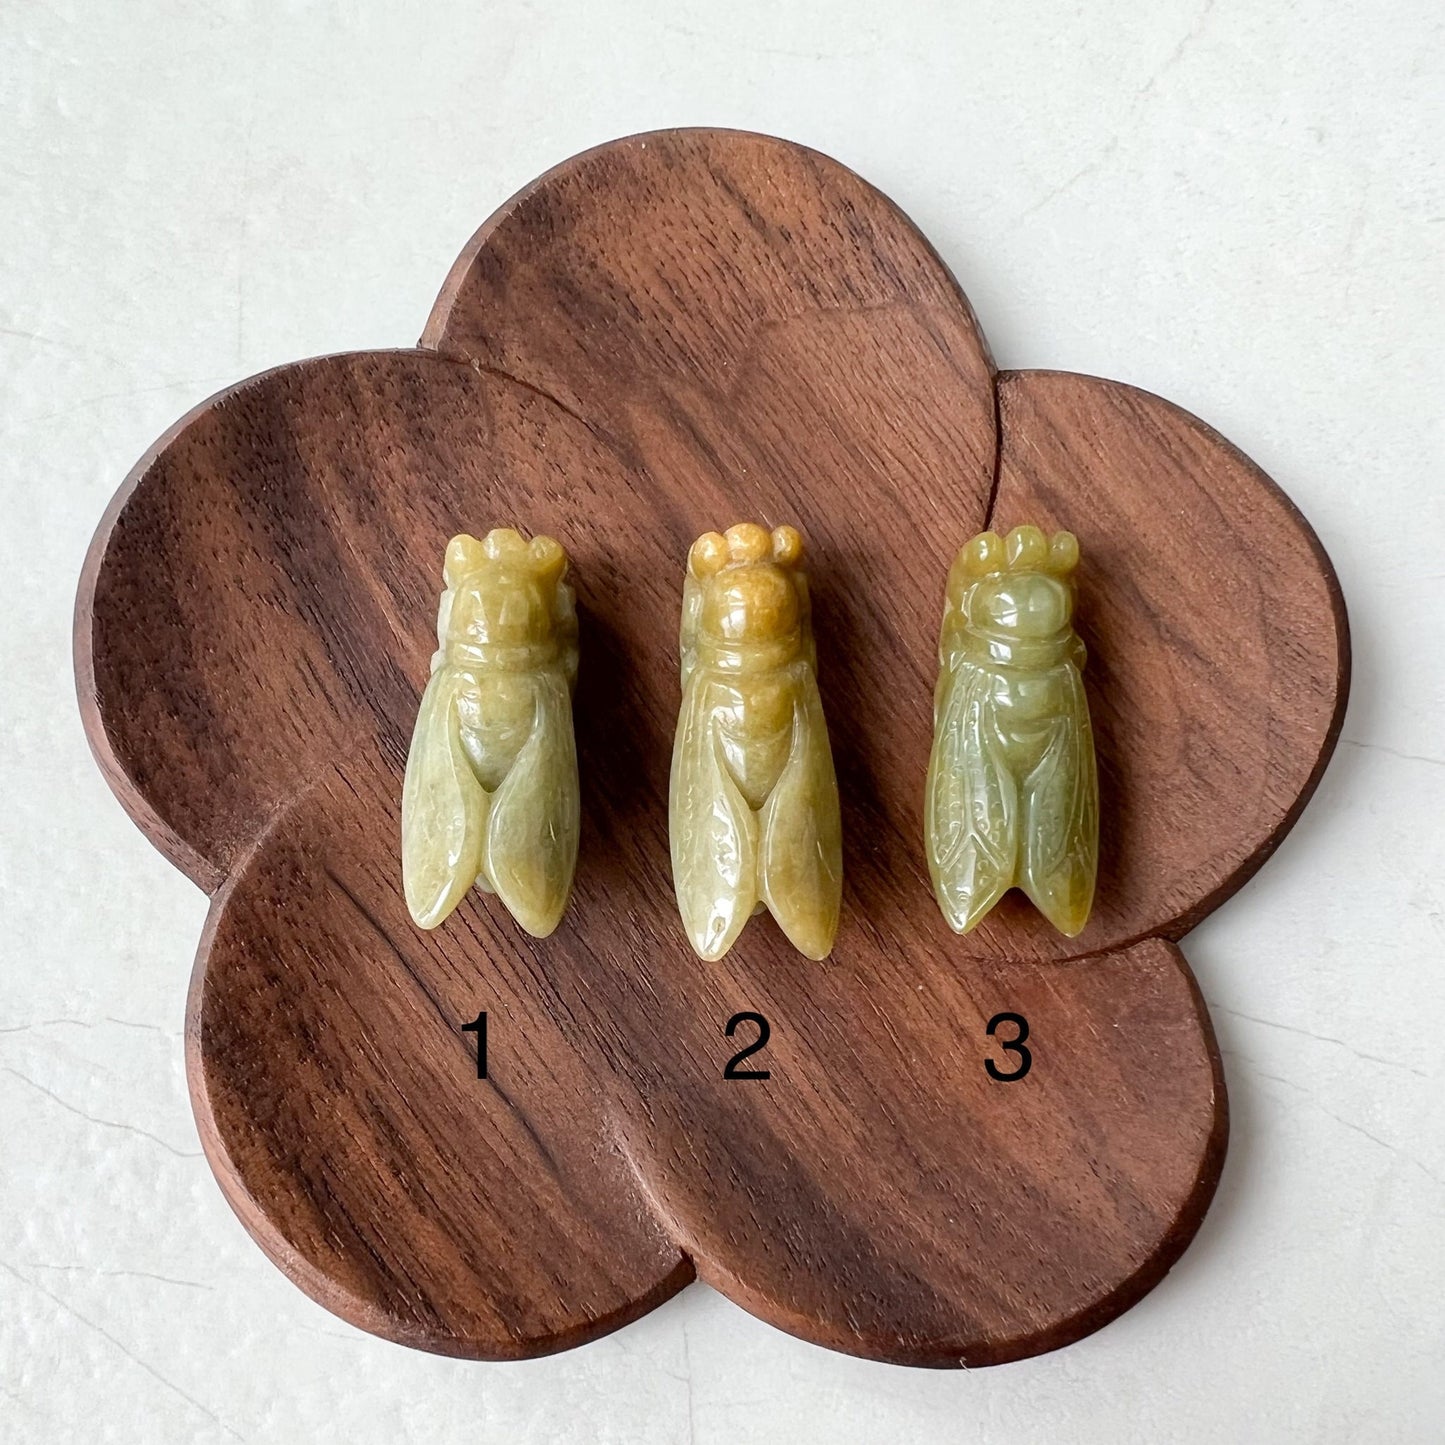 Small Jade Cicada, Green Yellow Jadeite Jade, Hand Carved Pendant Necklace, ZYF-0322-1652109402 - AriaDesignCollection